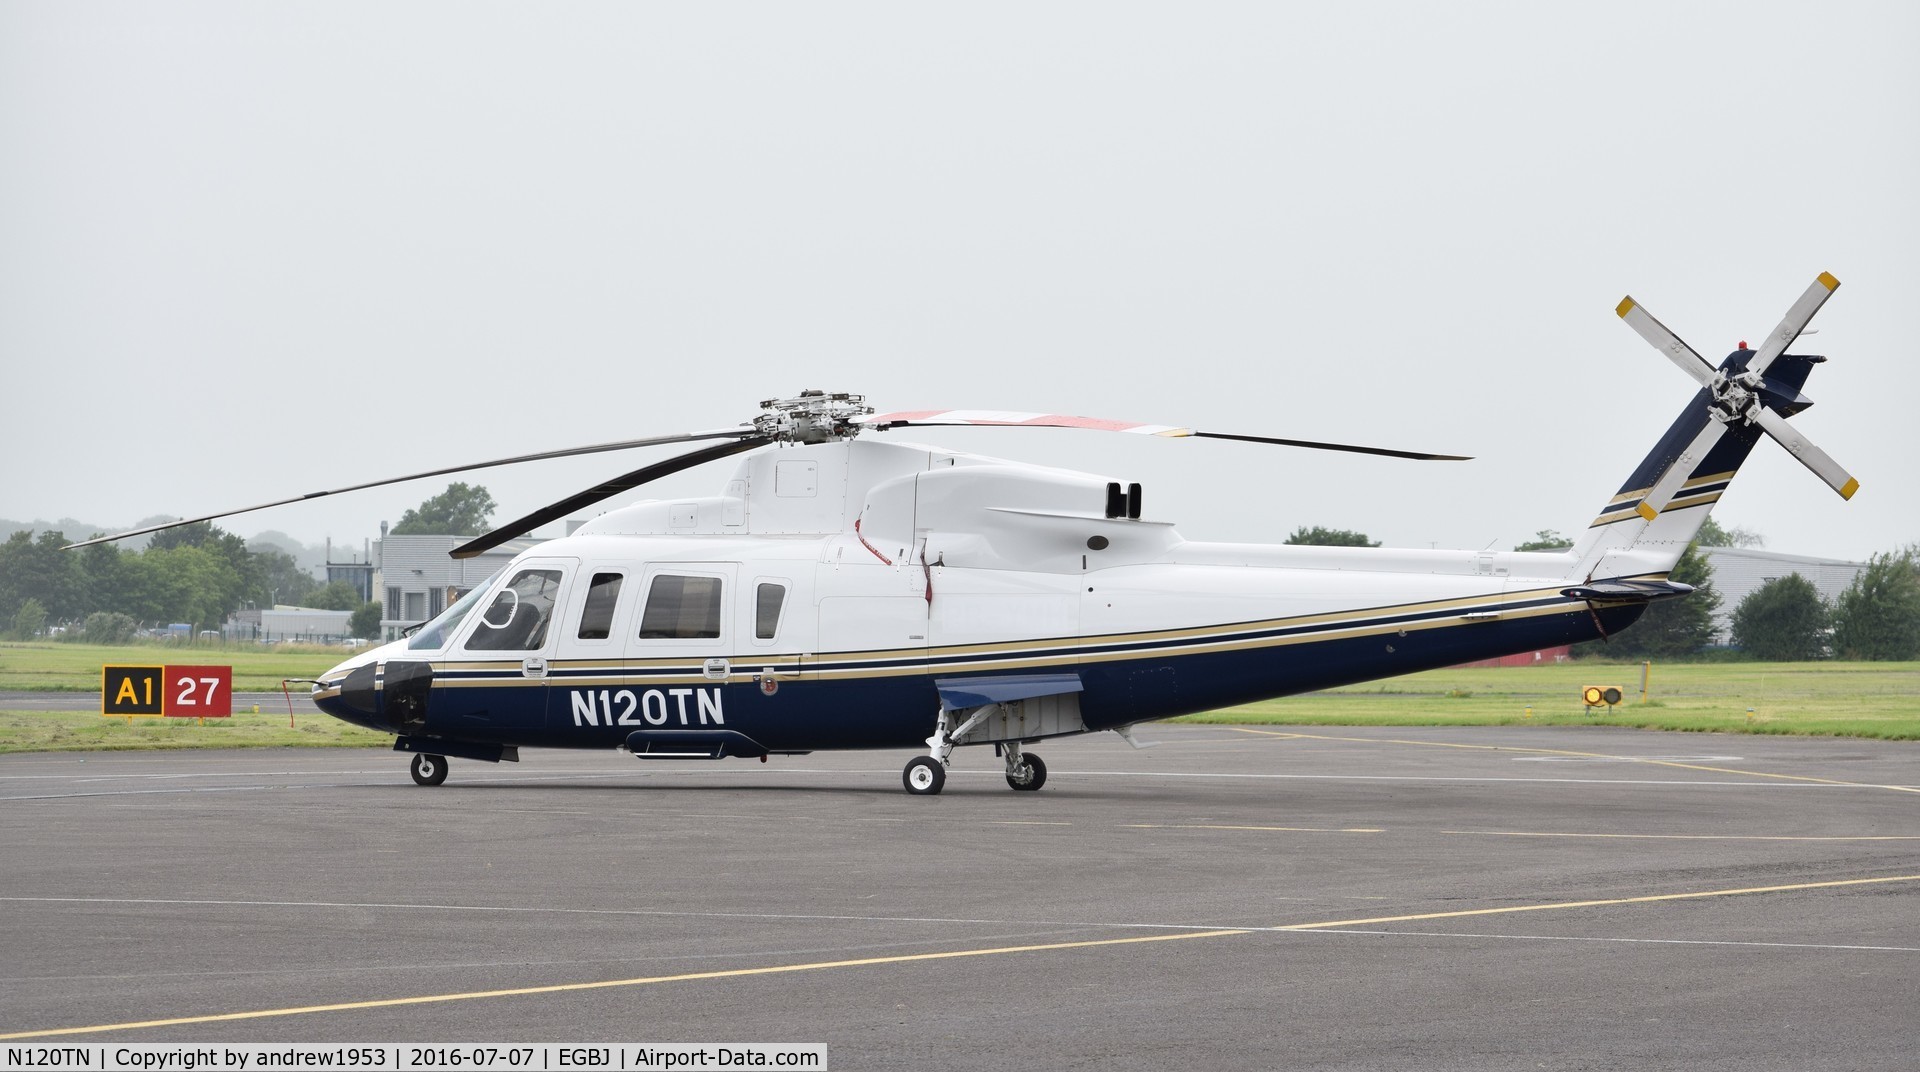 N120TN, 2010 Keystone Helicopter S-76C C/N 760781, N120TN at Gloucestershire Airport.